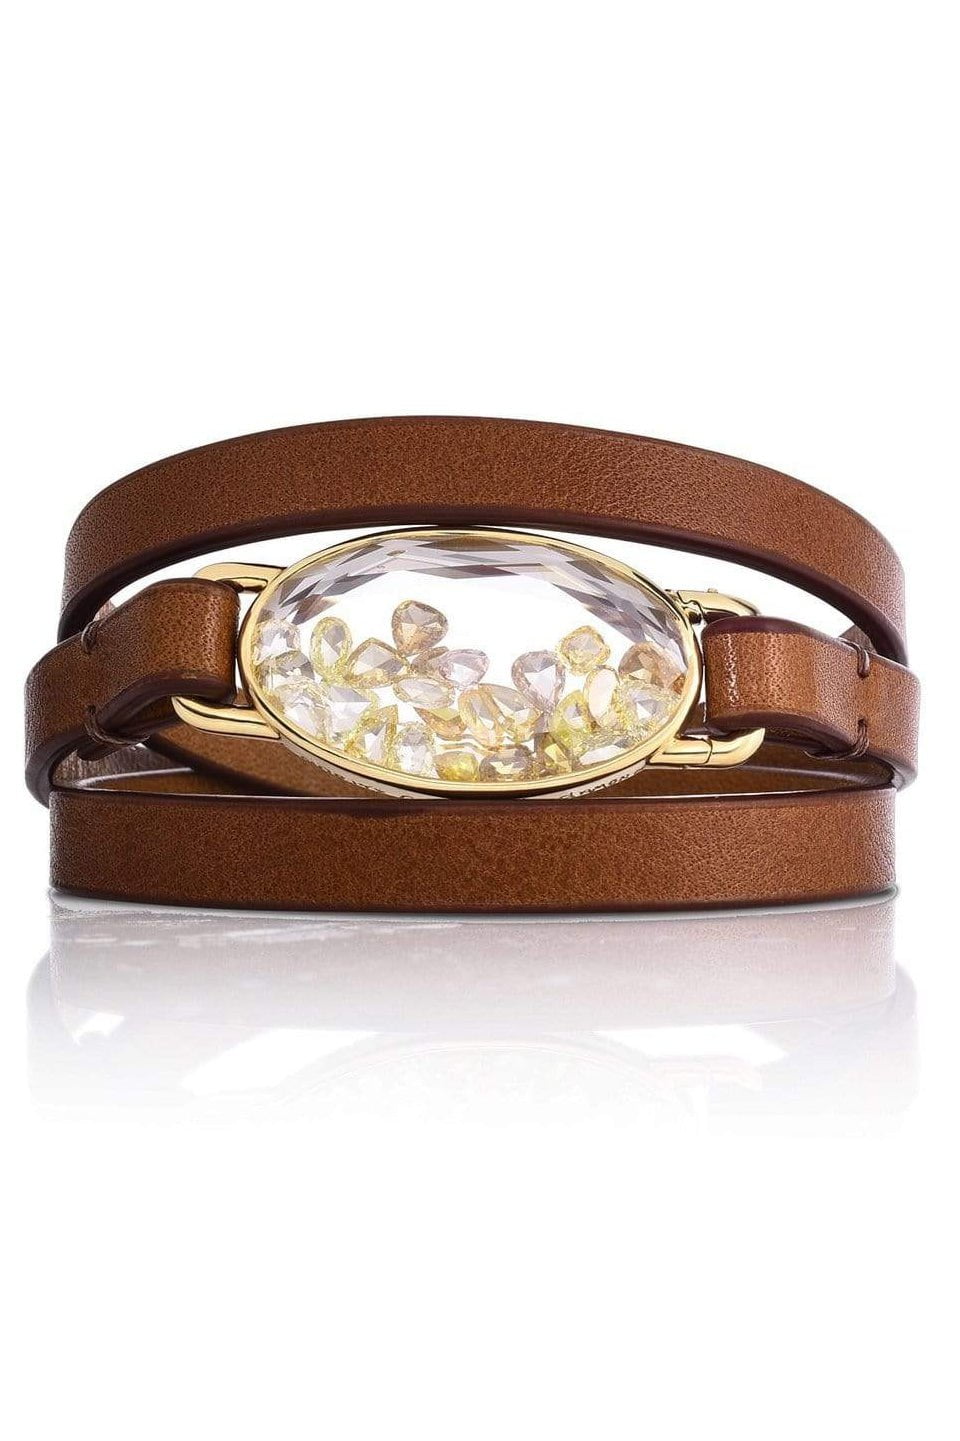 MORITZ GLIK-Leather Wrap Yellow Diamond Shaker Bracelet-YELLOW GOLD